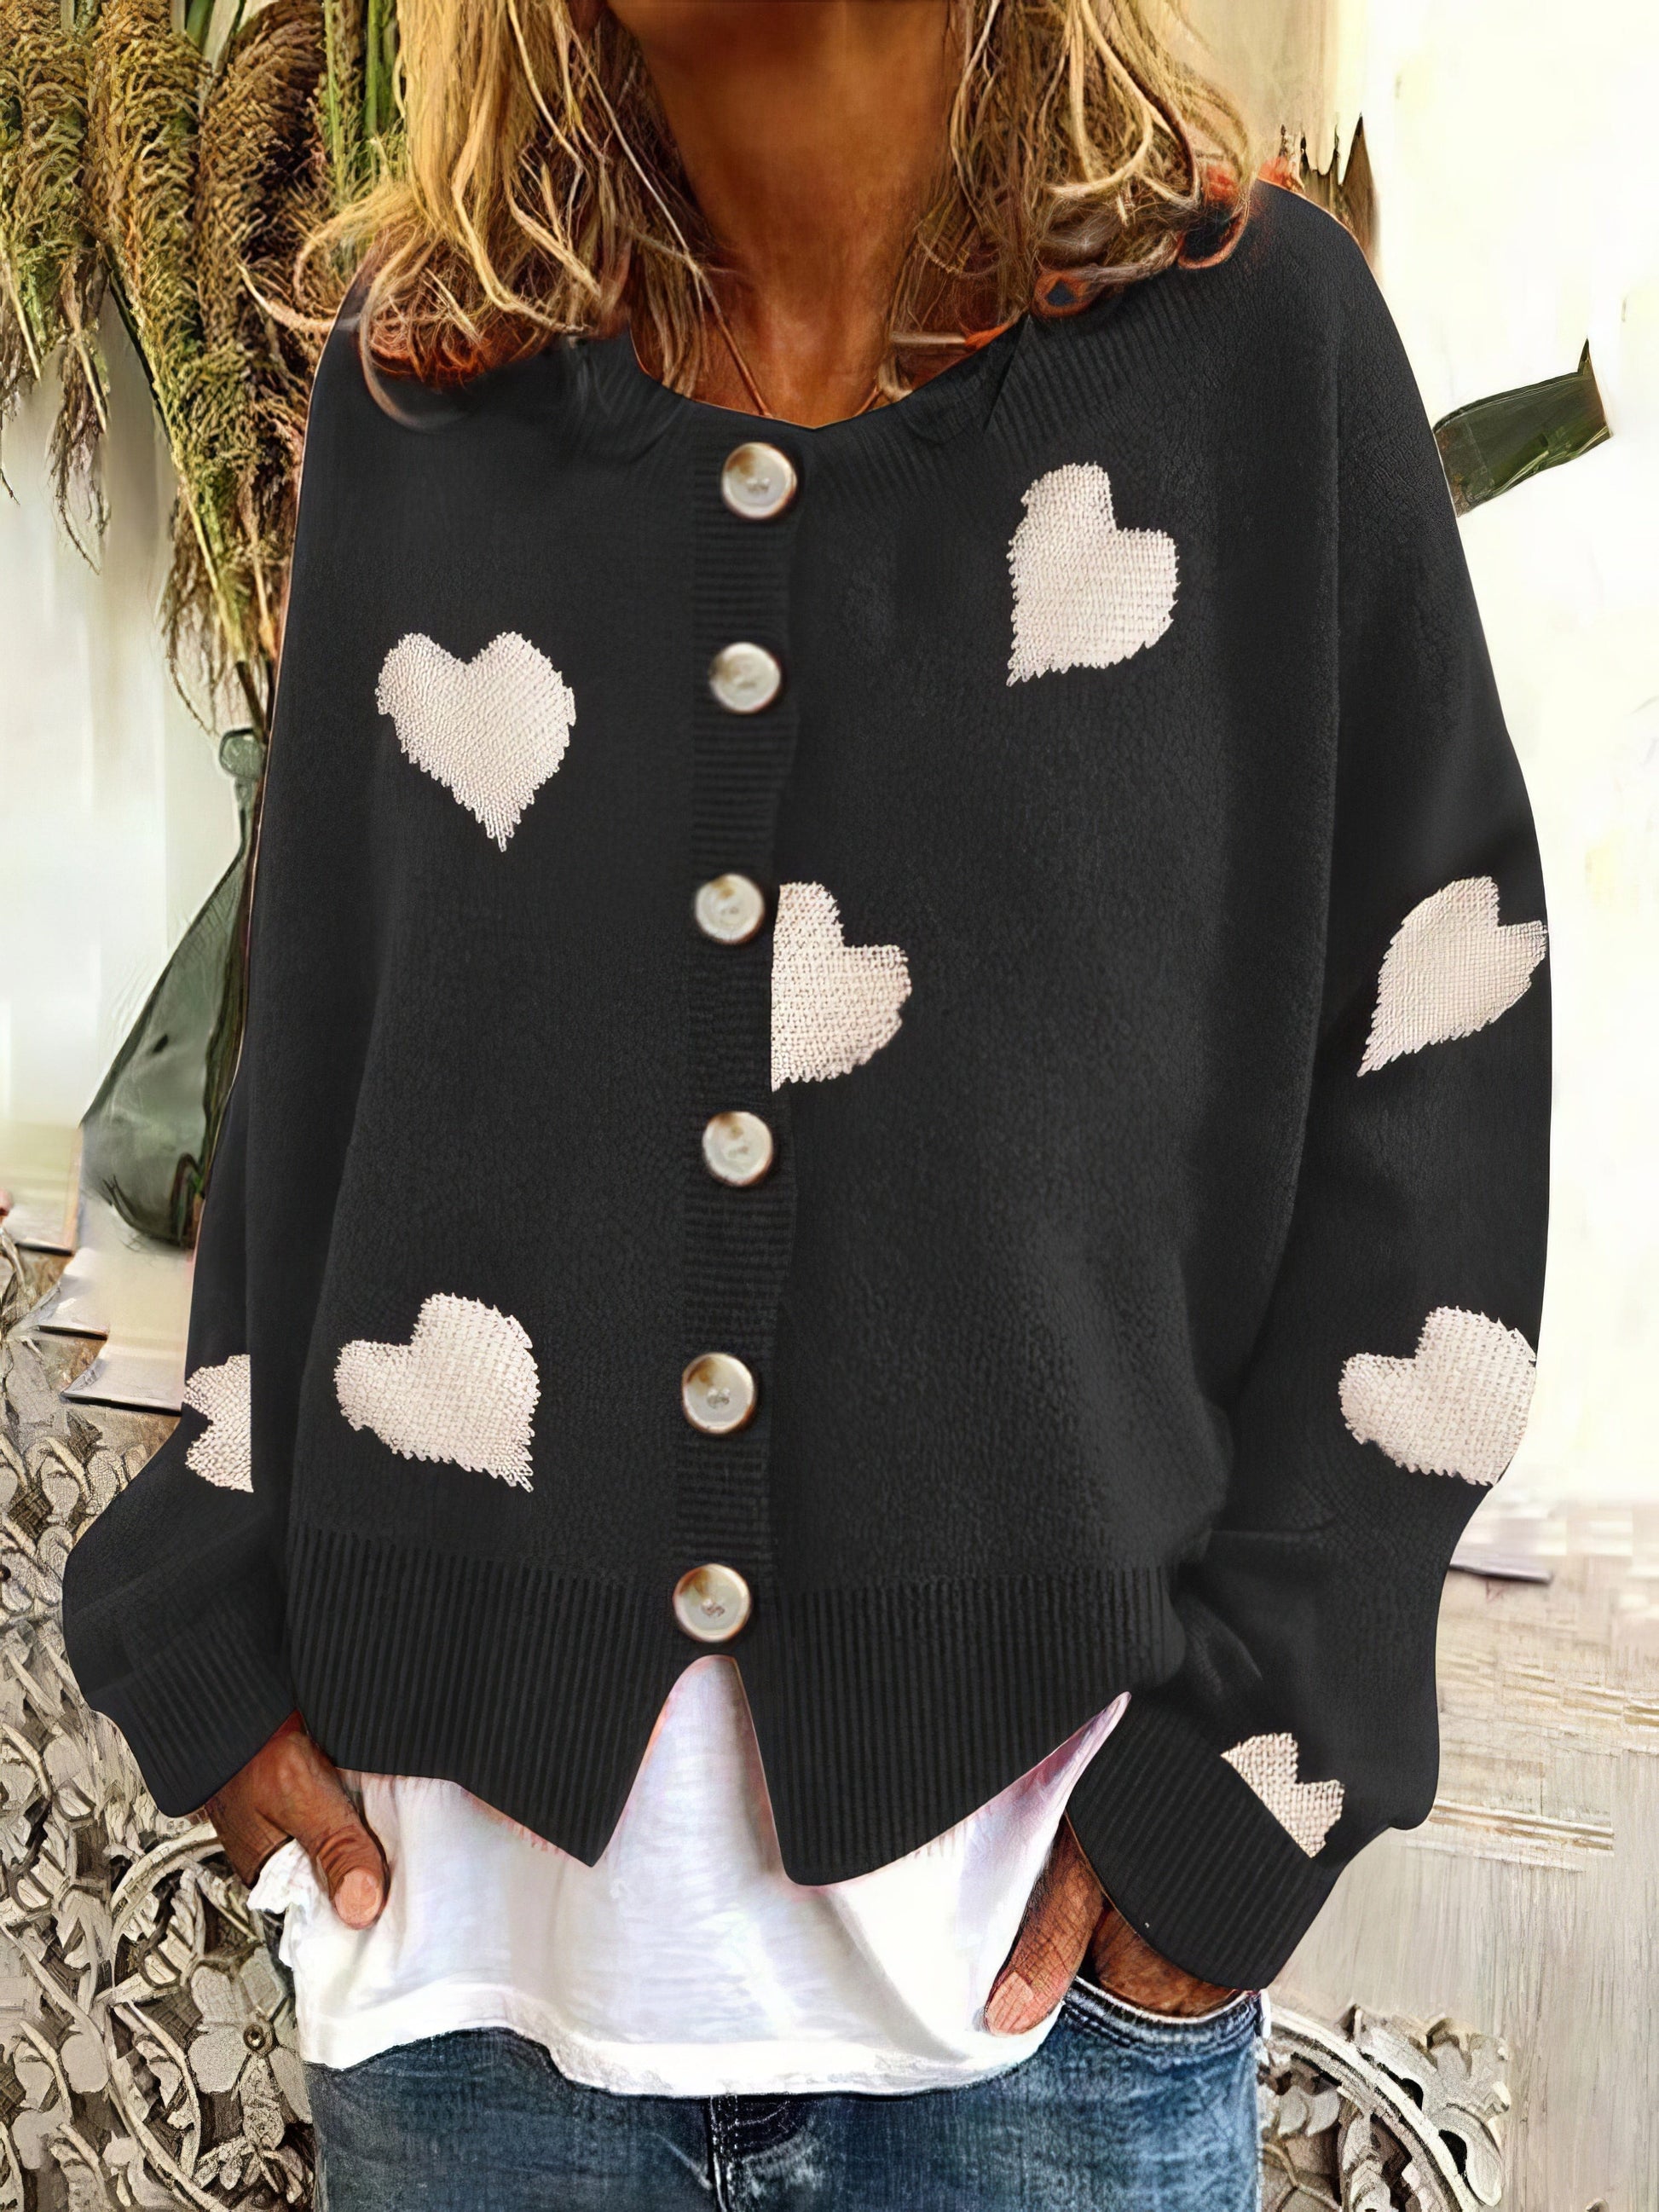 Knit Single-Breasted Heart Cardigan Sweater -Bishop SWE2109181183BLAS Black / 2 (S)